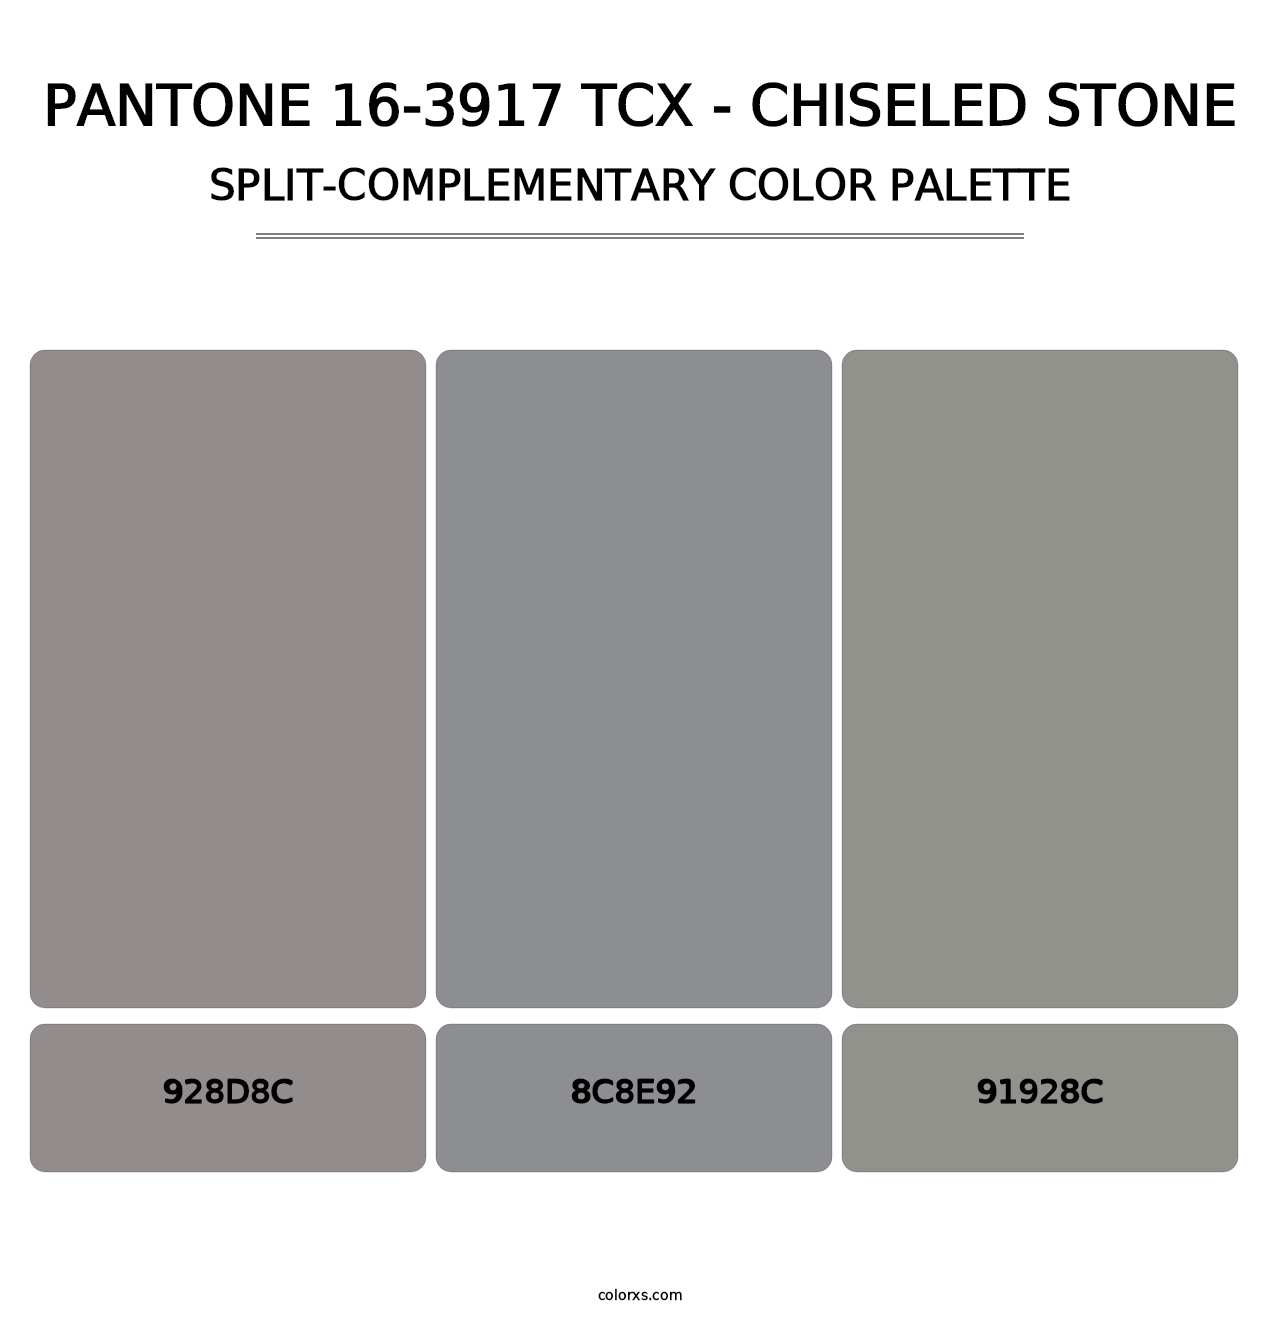 PANTONE 16-3917 TCX - Chiseled Stone - Split-Complementary Color Palette